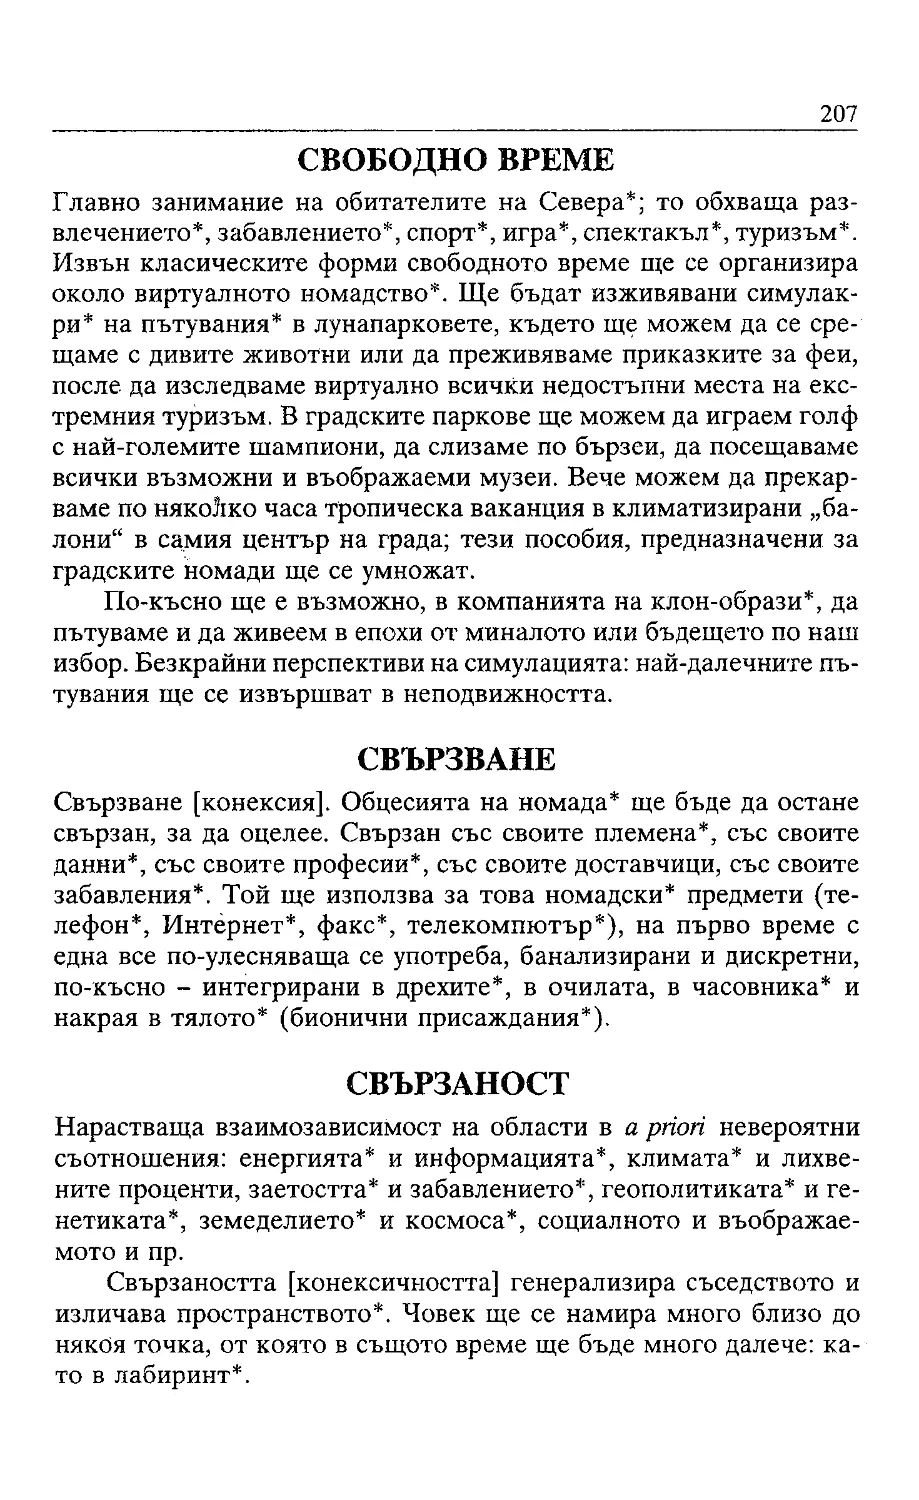 ﻿Жак Атали. Речник на 21 век_Page_102_Image_0001_2